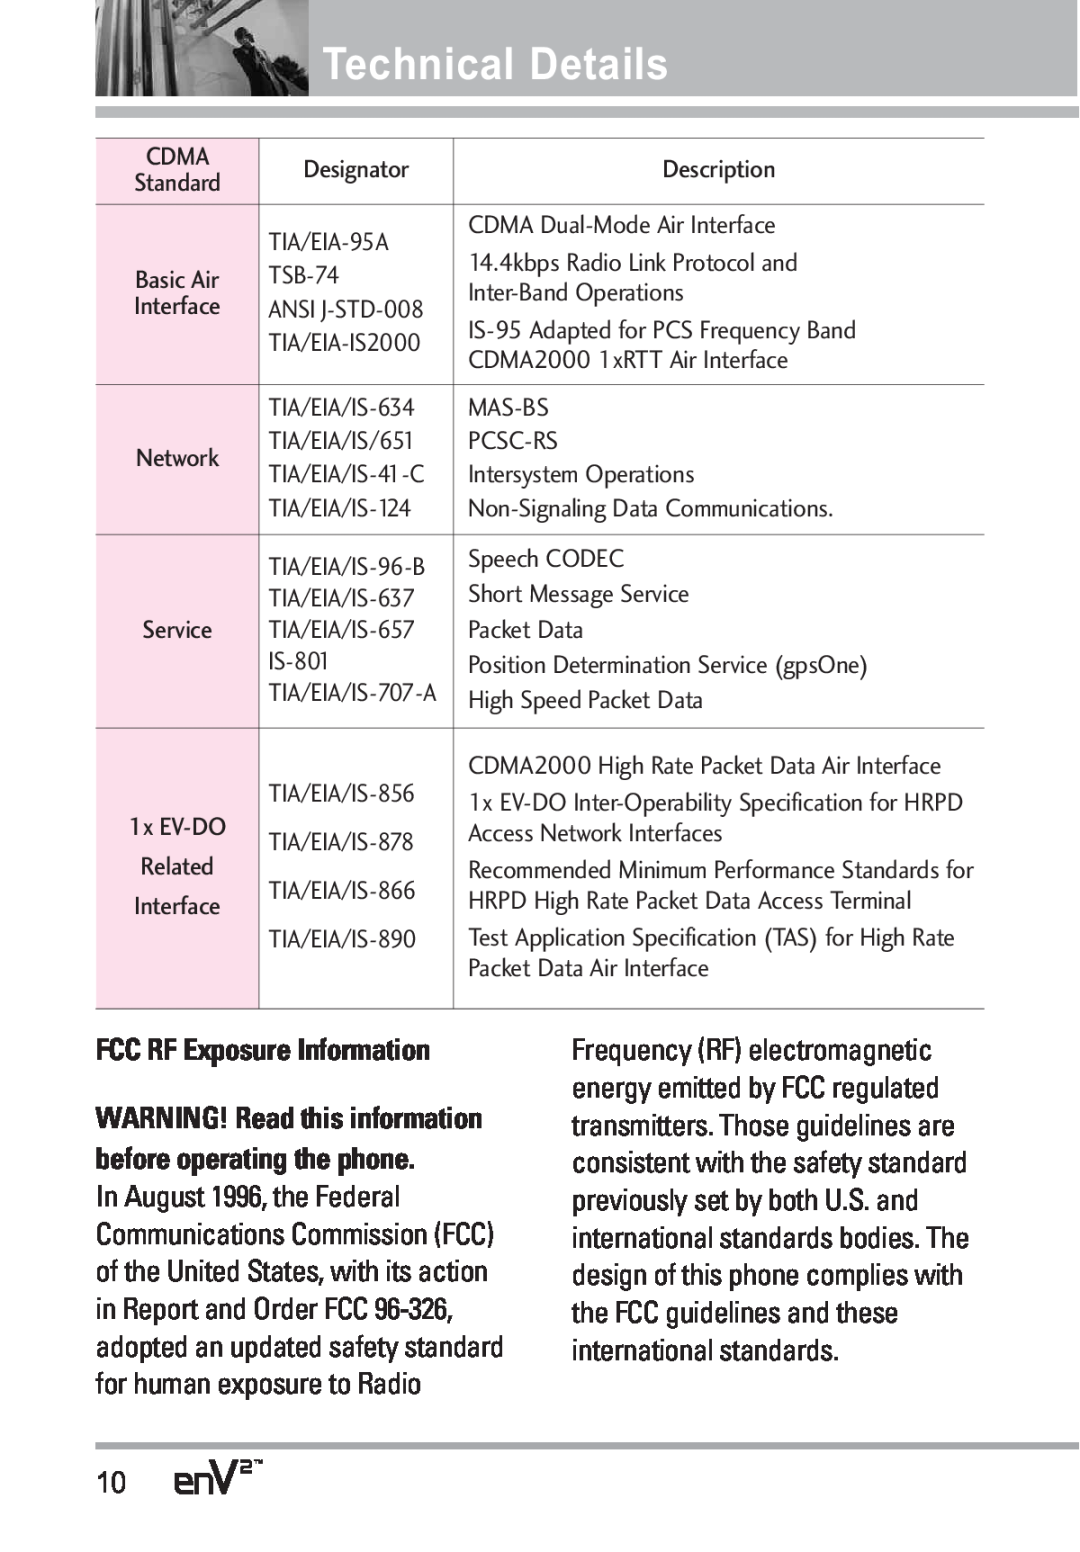 LG Electronics EnV2 manual Technical Details, FCC RF Exposure Information 